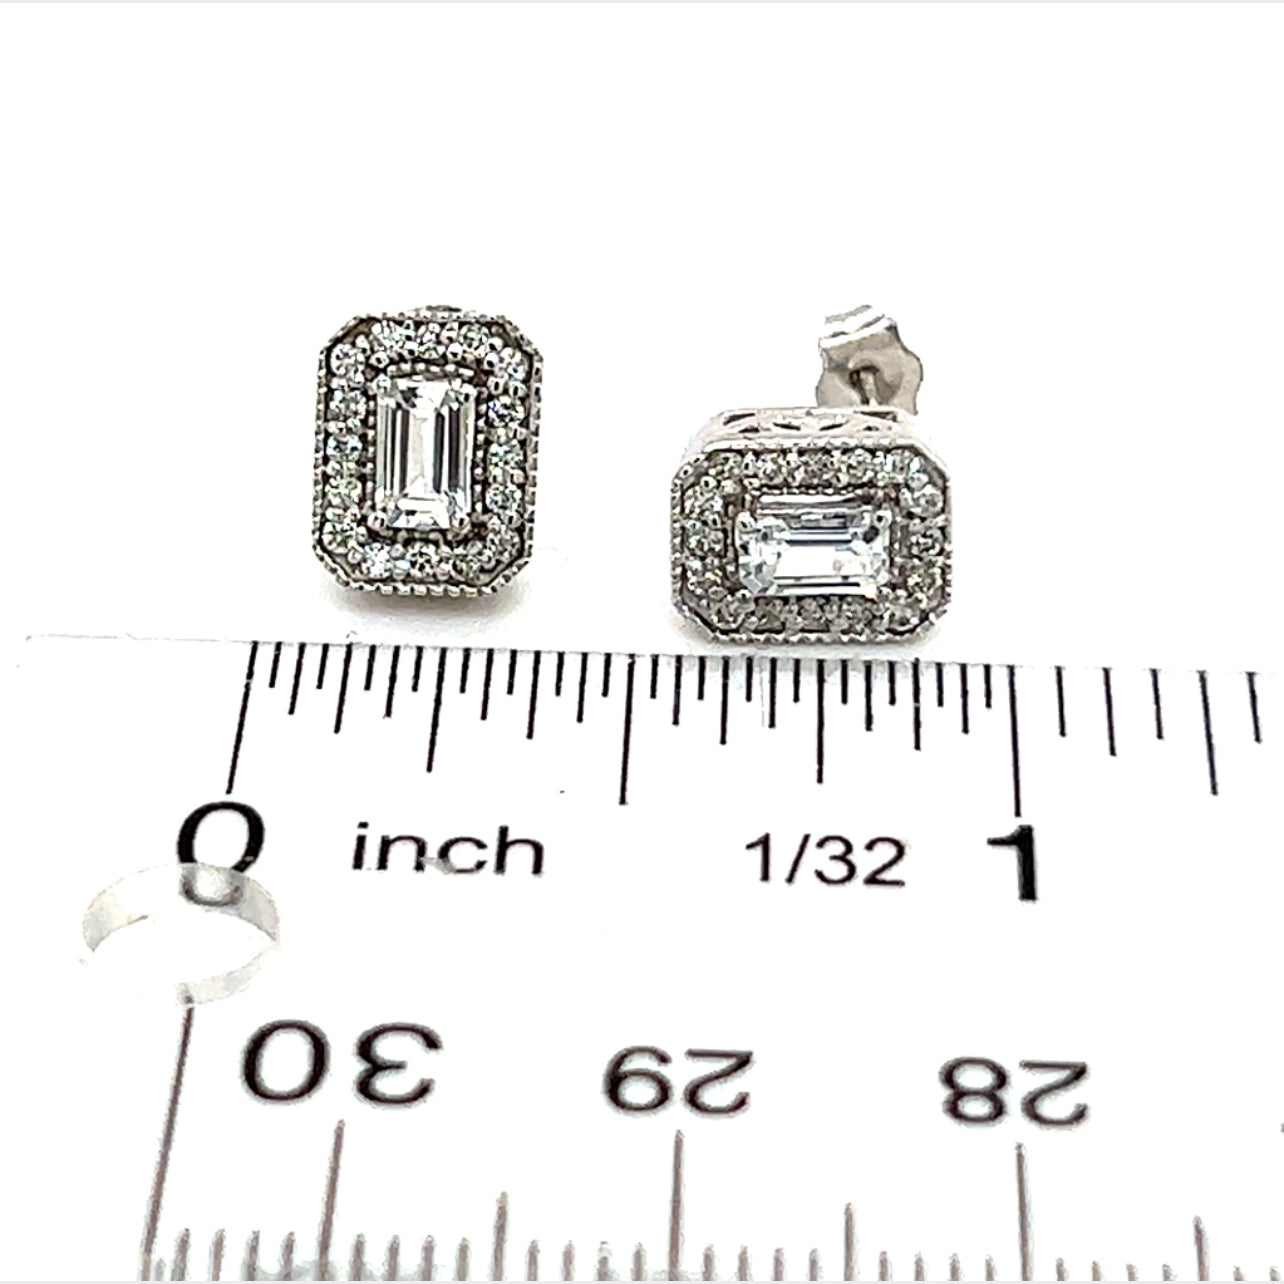 Natural Sapphire Diamond Stud Earrings 14k W Gold 0.96 TCW Certified $2950 121269 - Certified Estate Jewelry